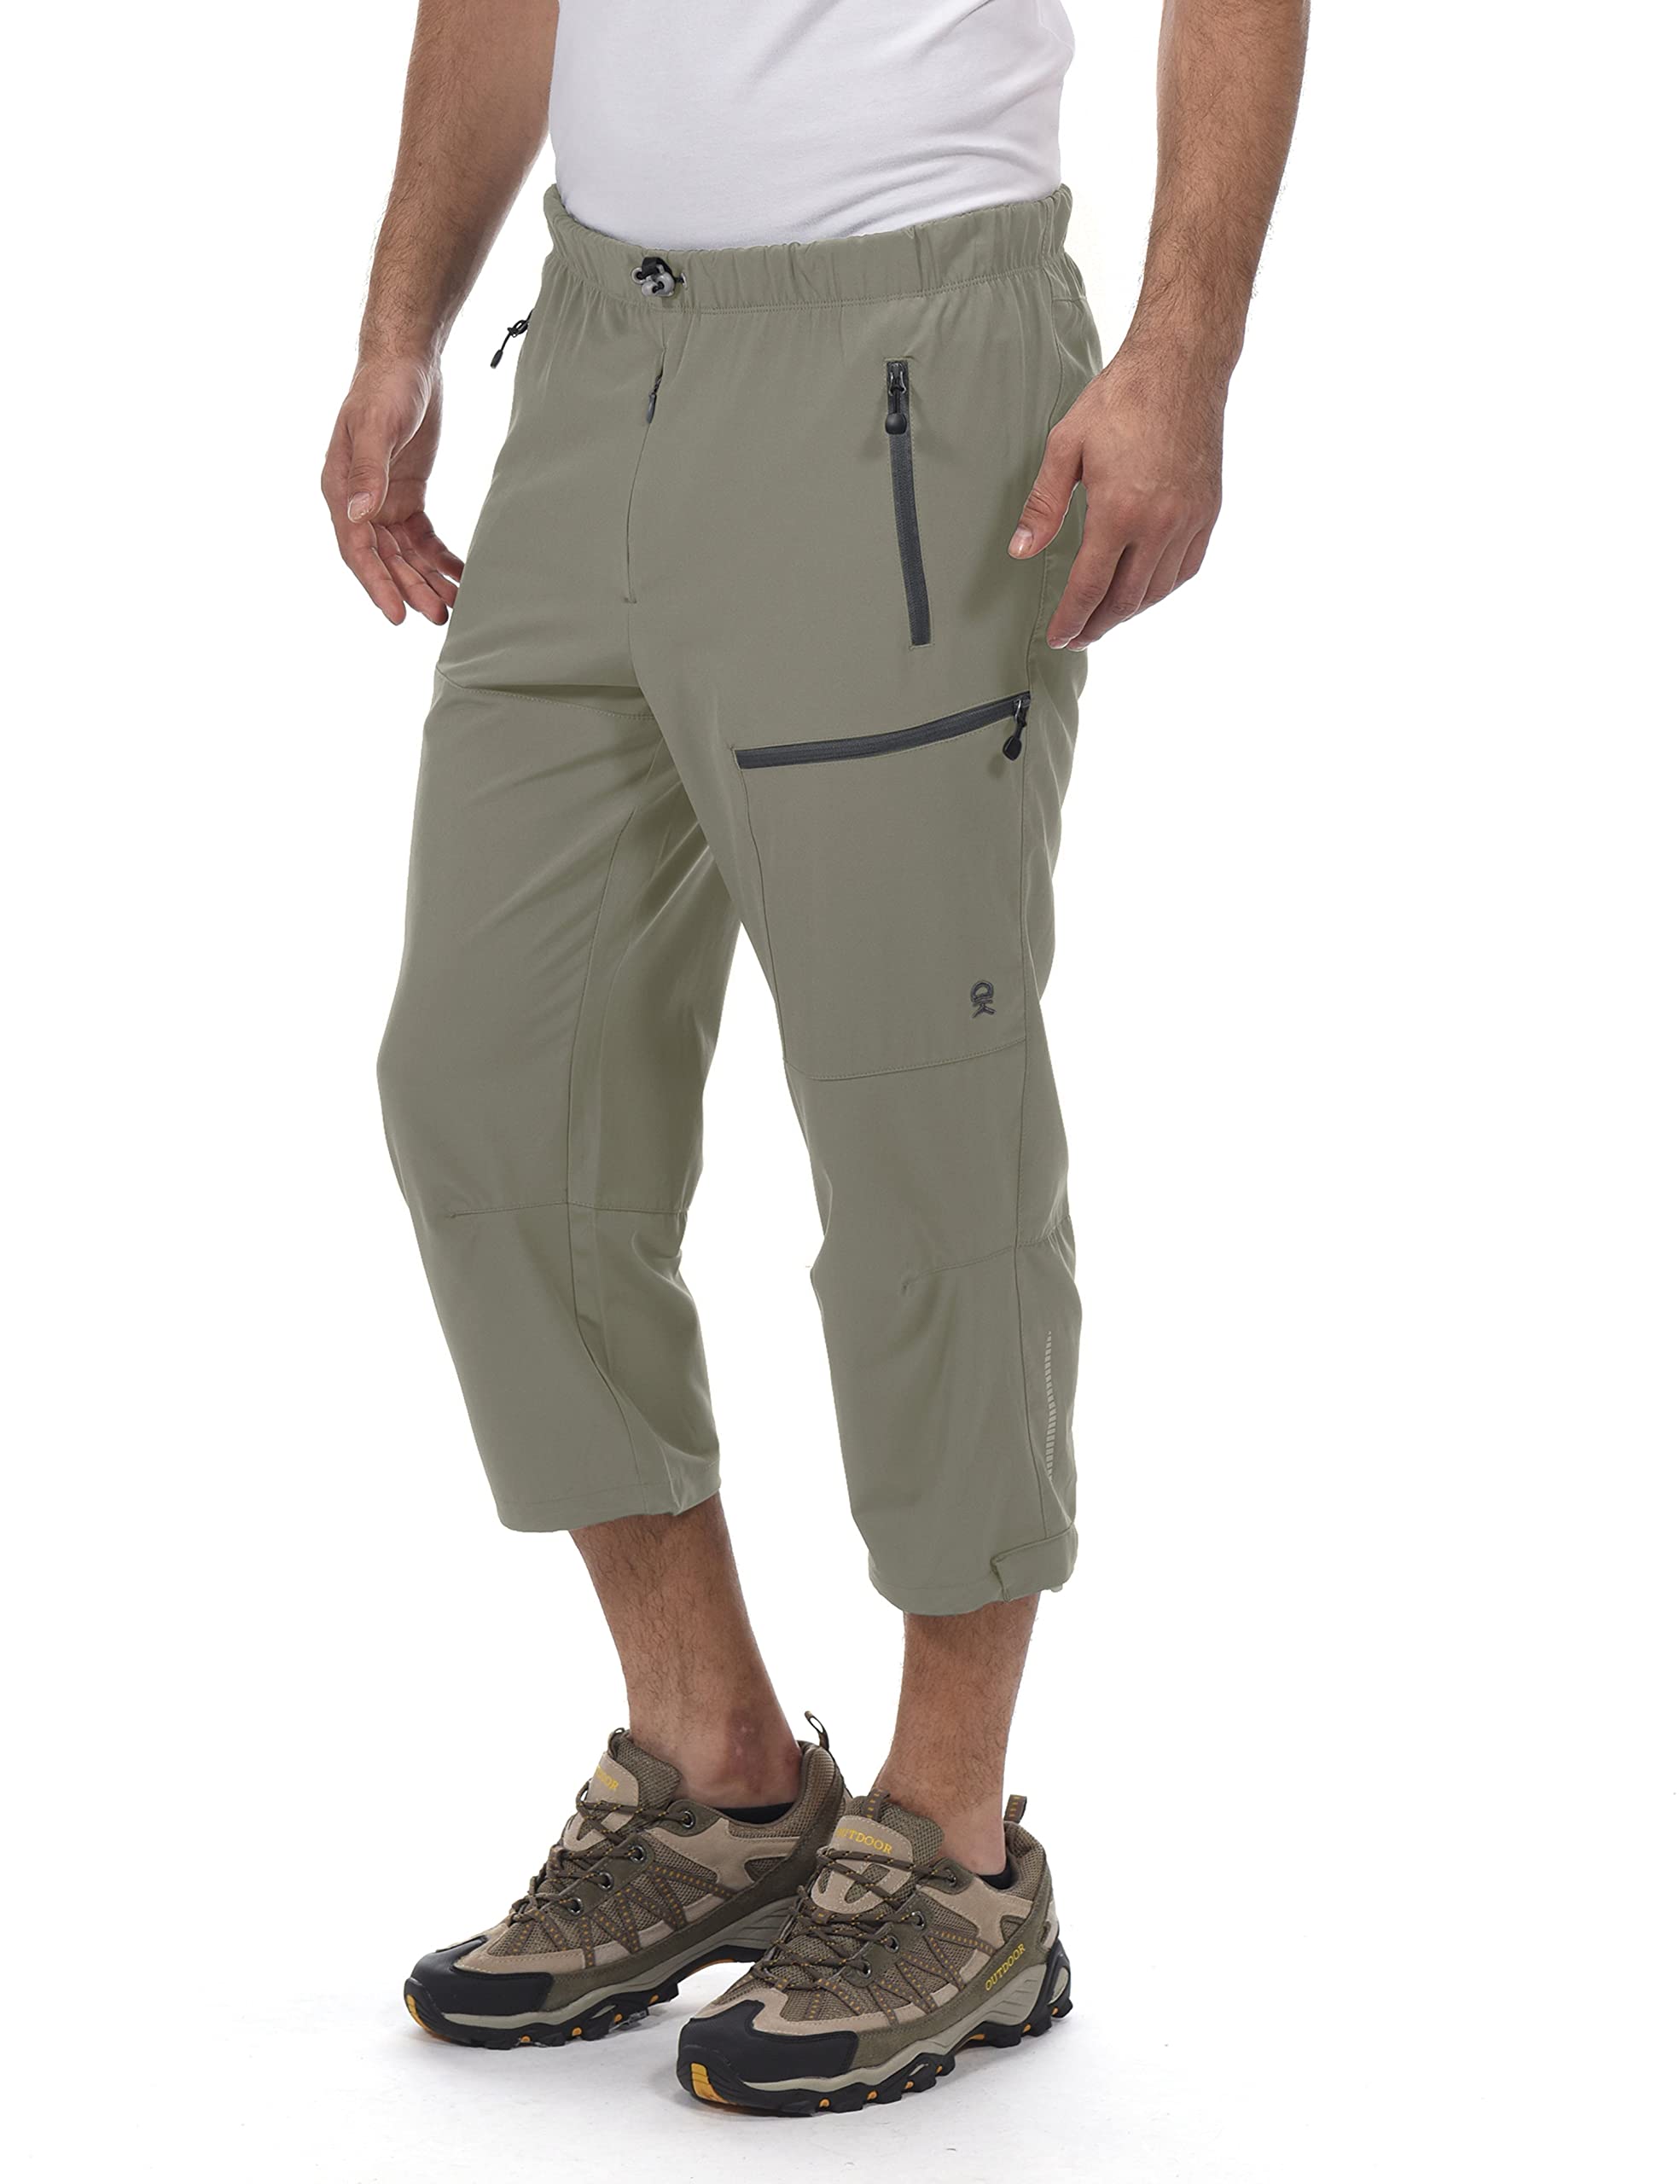 Little Donkey Andy Men's Quick Dry 3/4 Pants Lightweight Capri Shorts Hiking Fishing Travel Casual Sage L